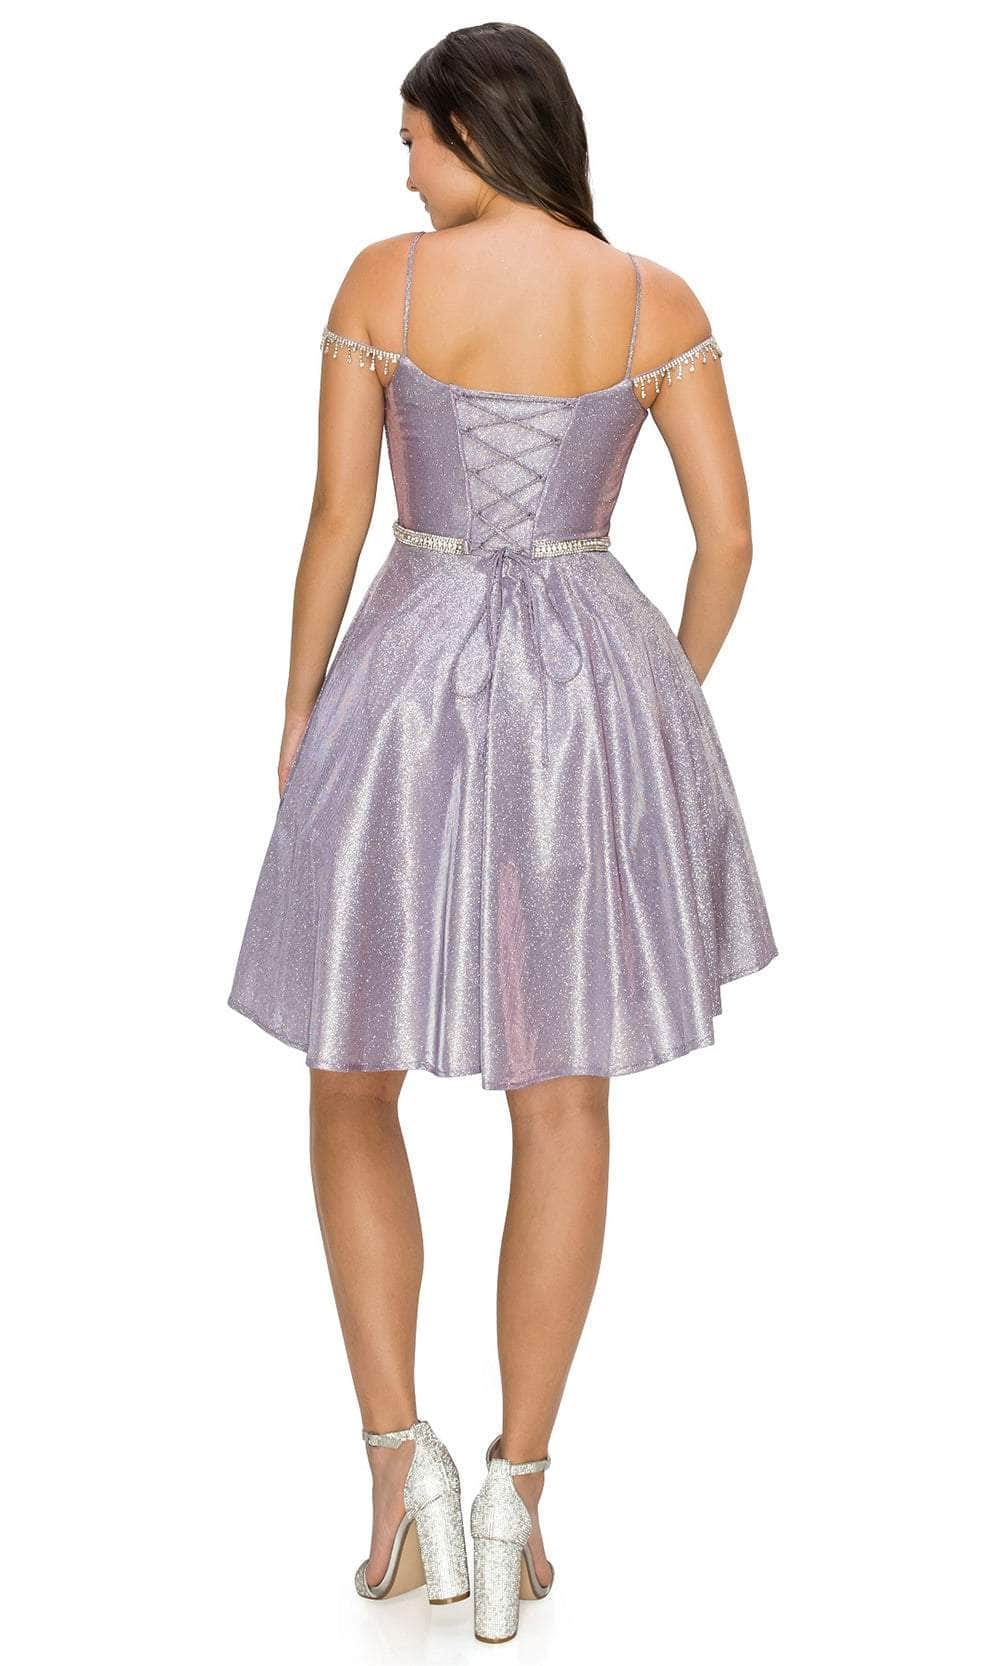 Cinderella Couture 8014J - Surplice V-Neck A-Line Cocktail Dress Special Occasion Dress